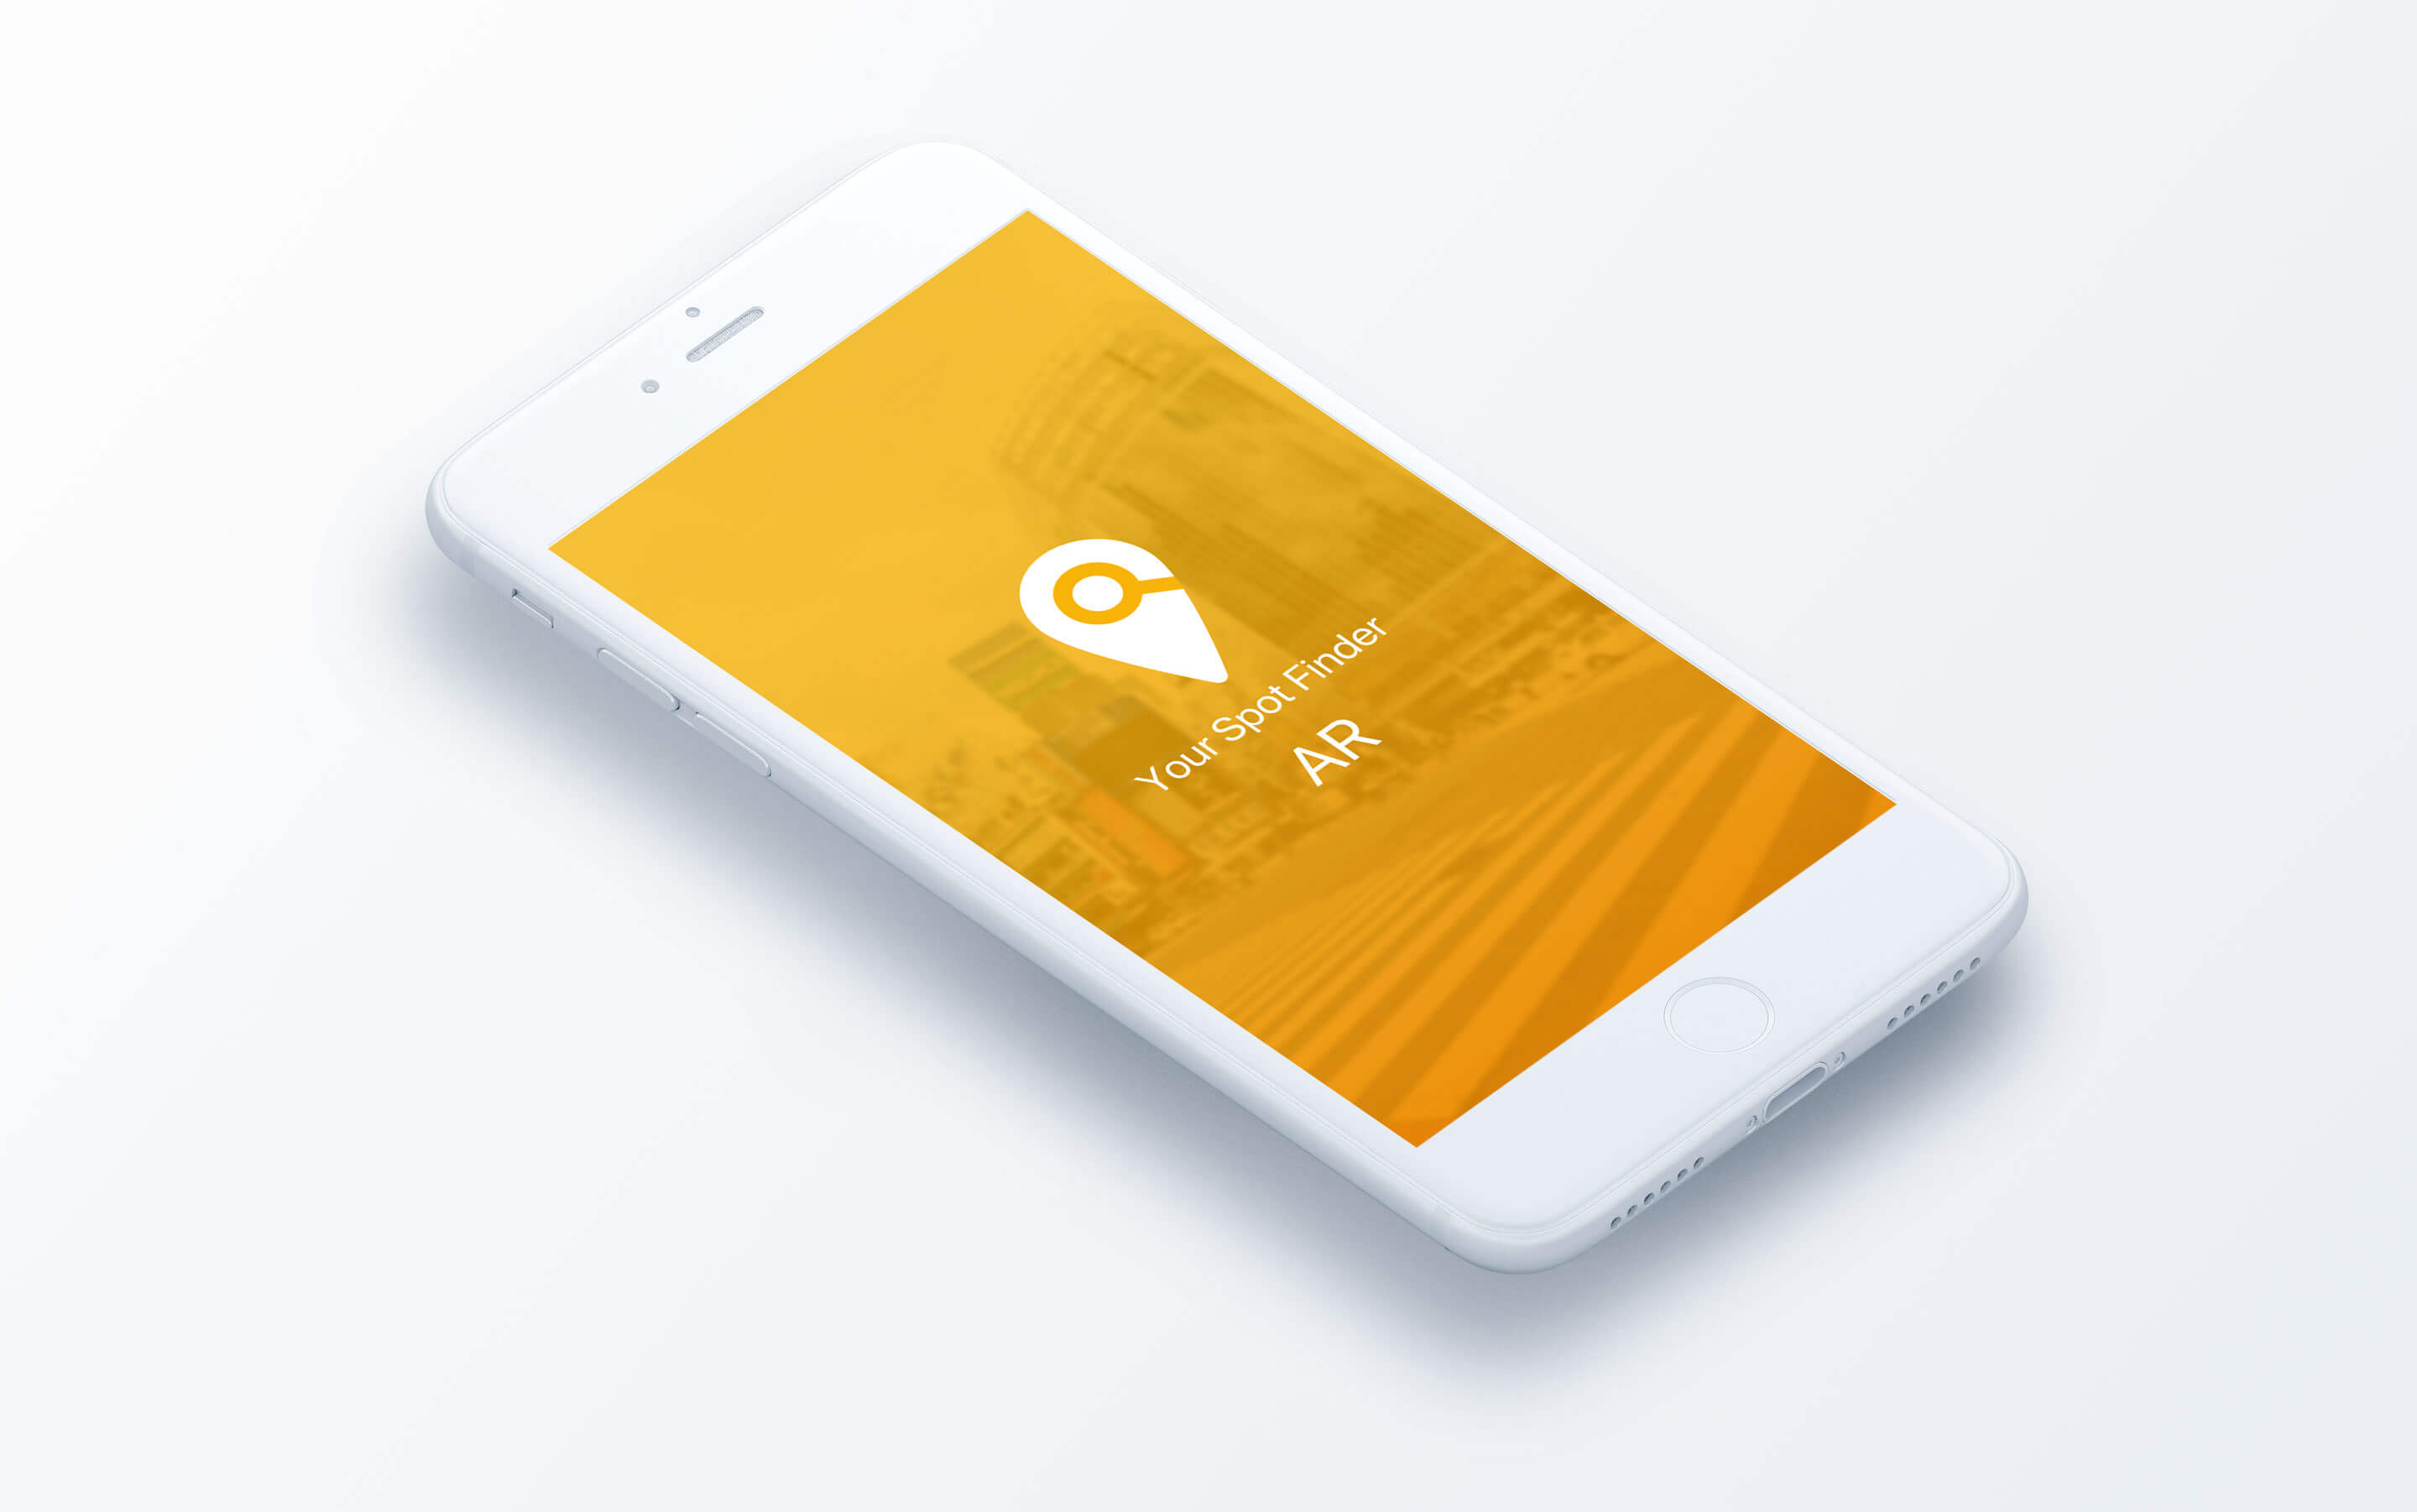 ARによる飲食店 発見アプリ（仮想） UI/UX デザイン / smartphone app(iOS) Your Spot Finer AR / UI UX